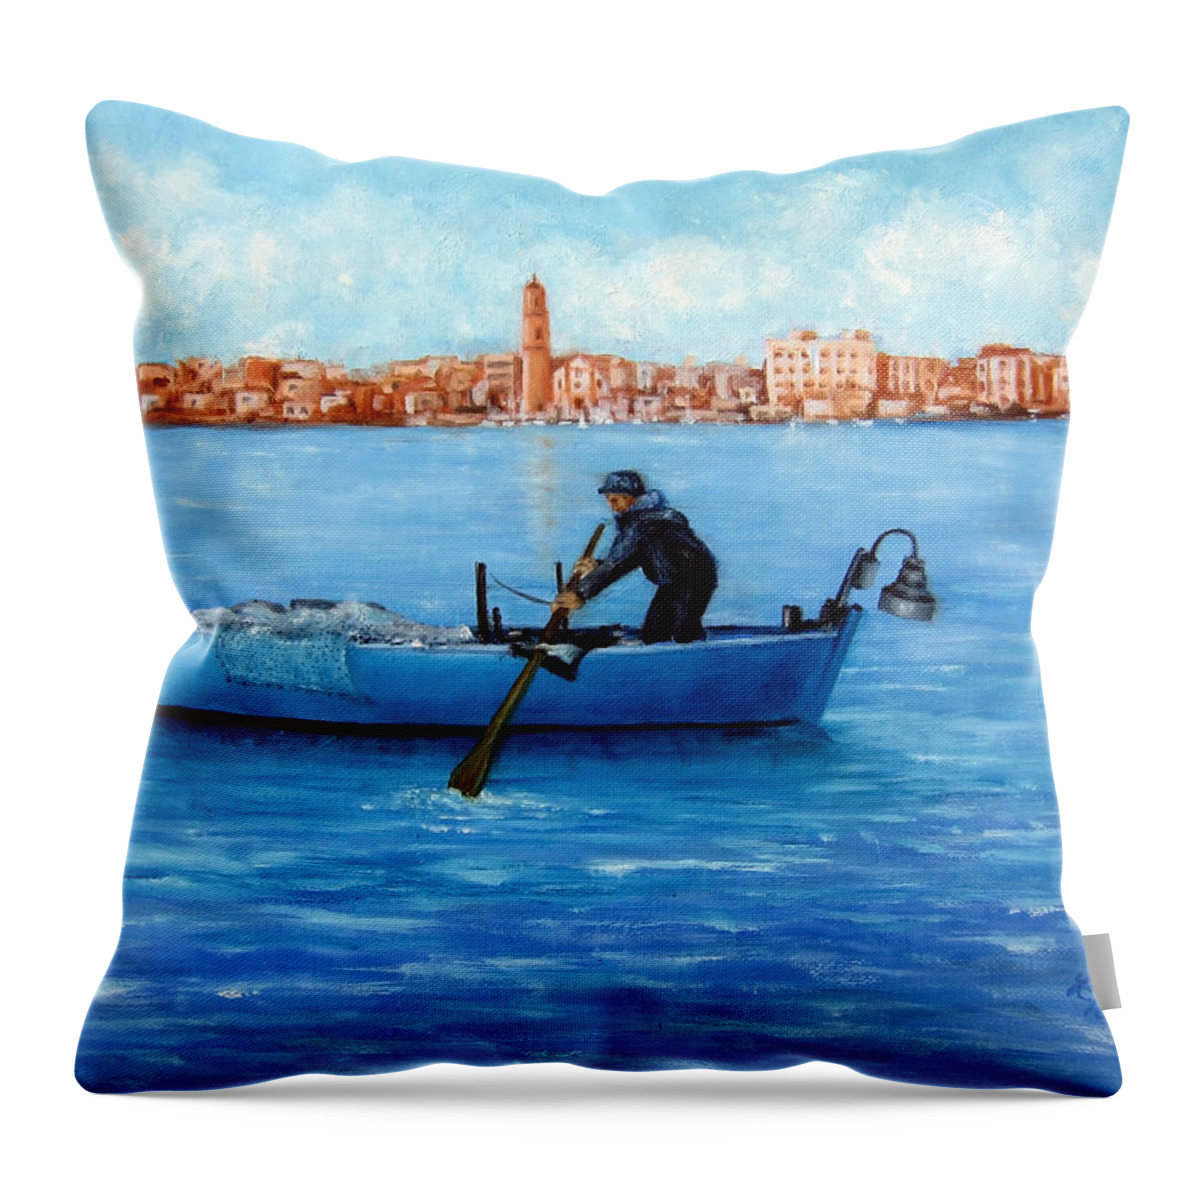 Italian Fisherman Throw Pillow featuring the painting The Fisherman from Mola di Bari by Leonardo Ruggieri